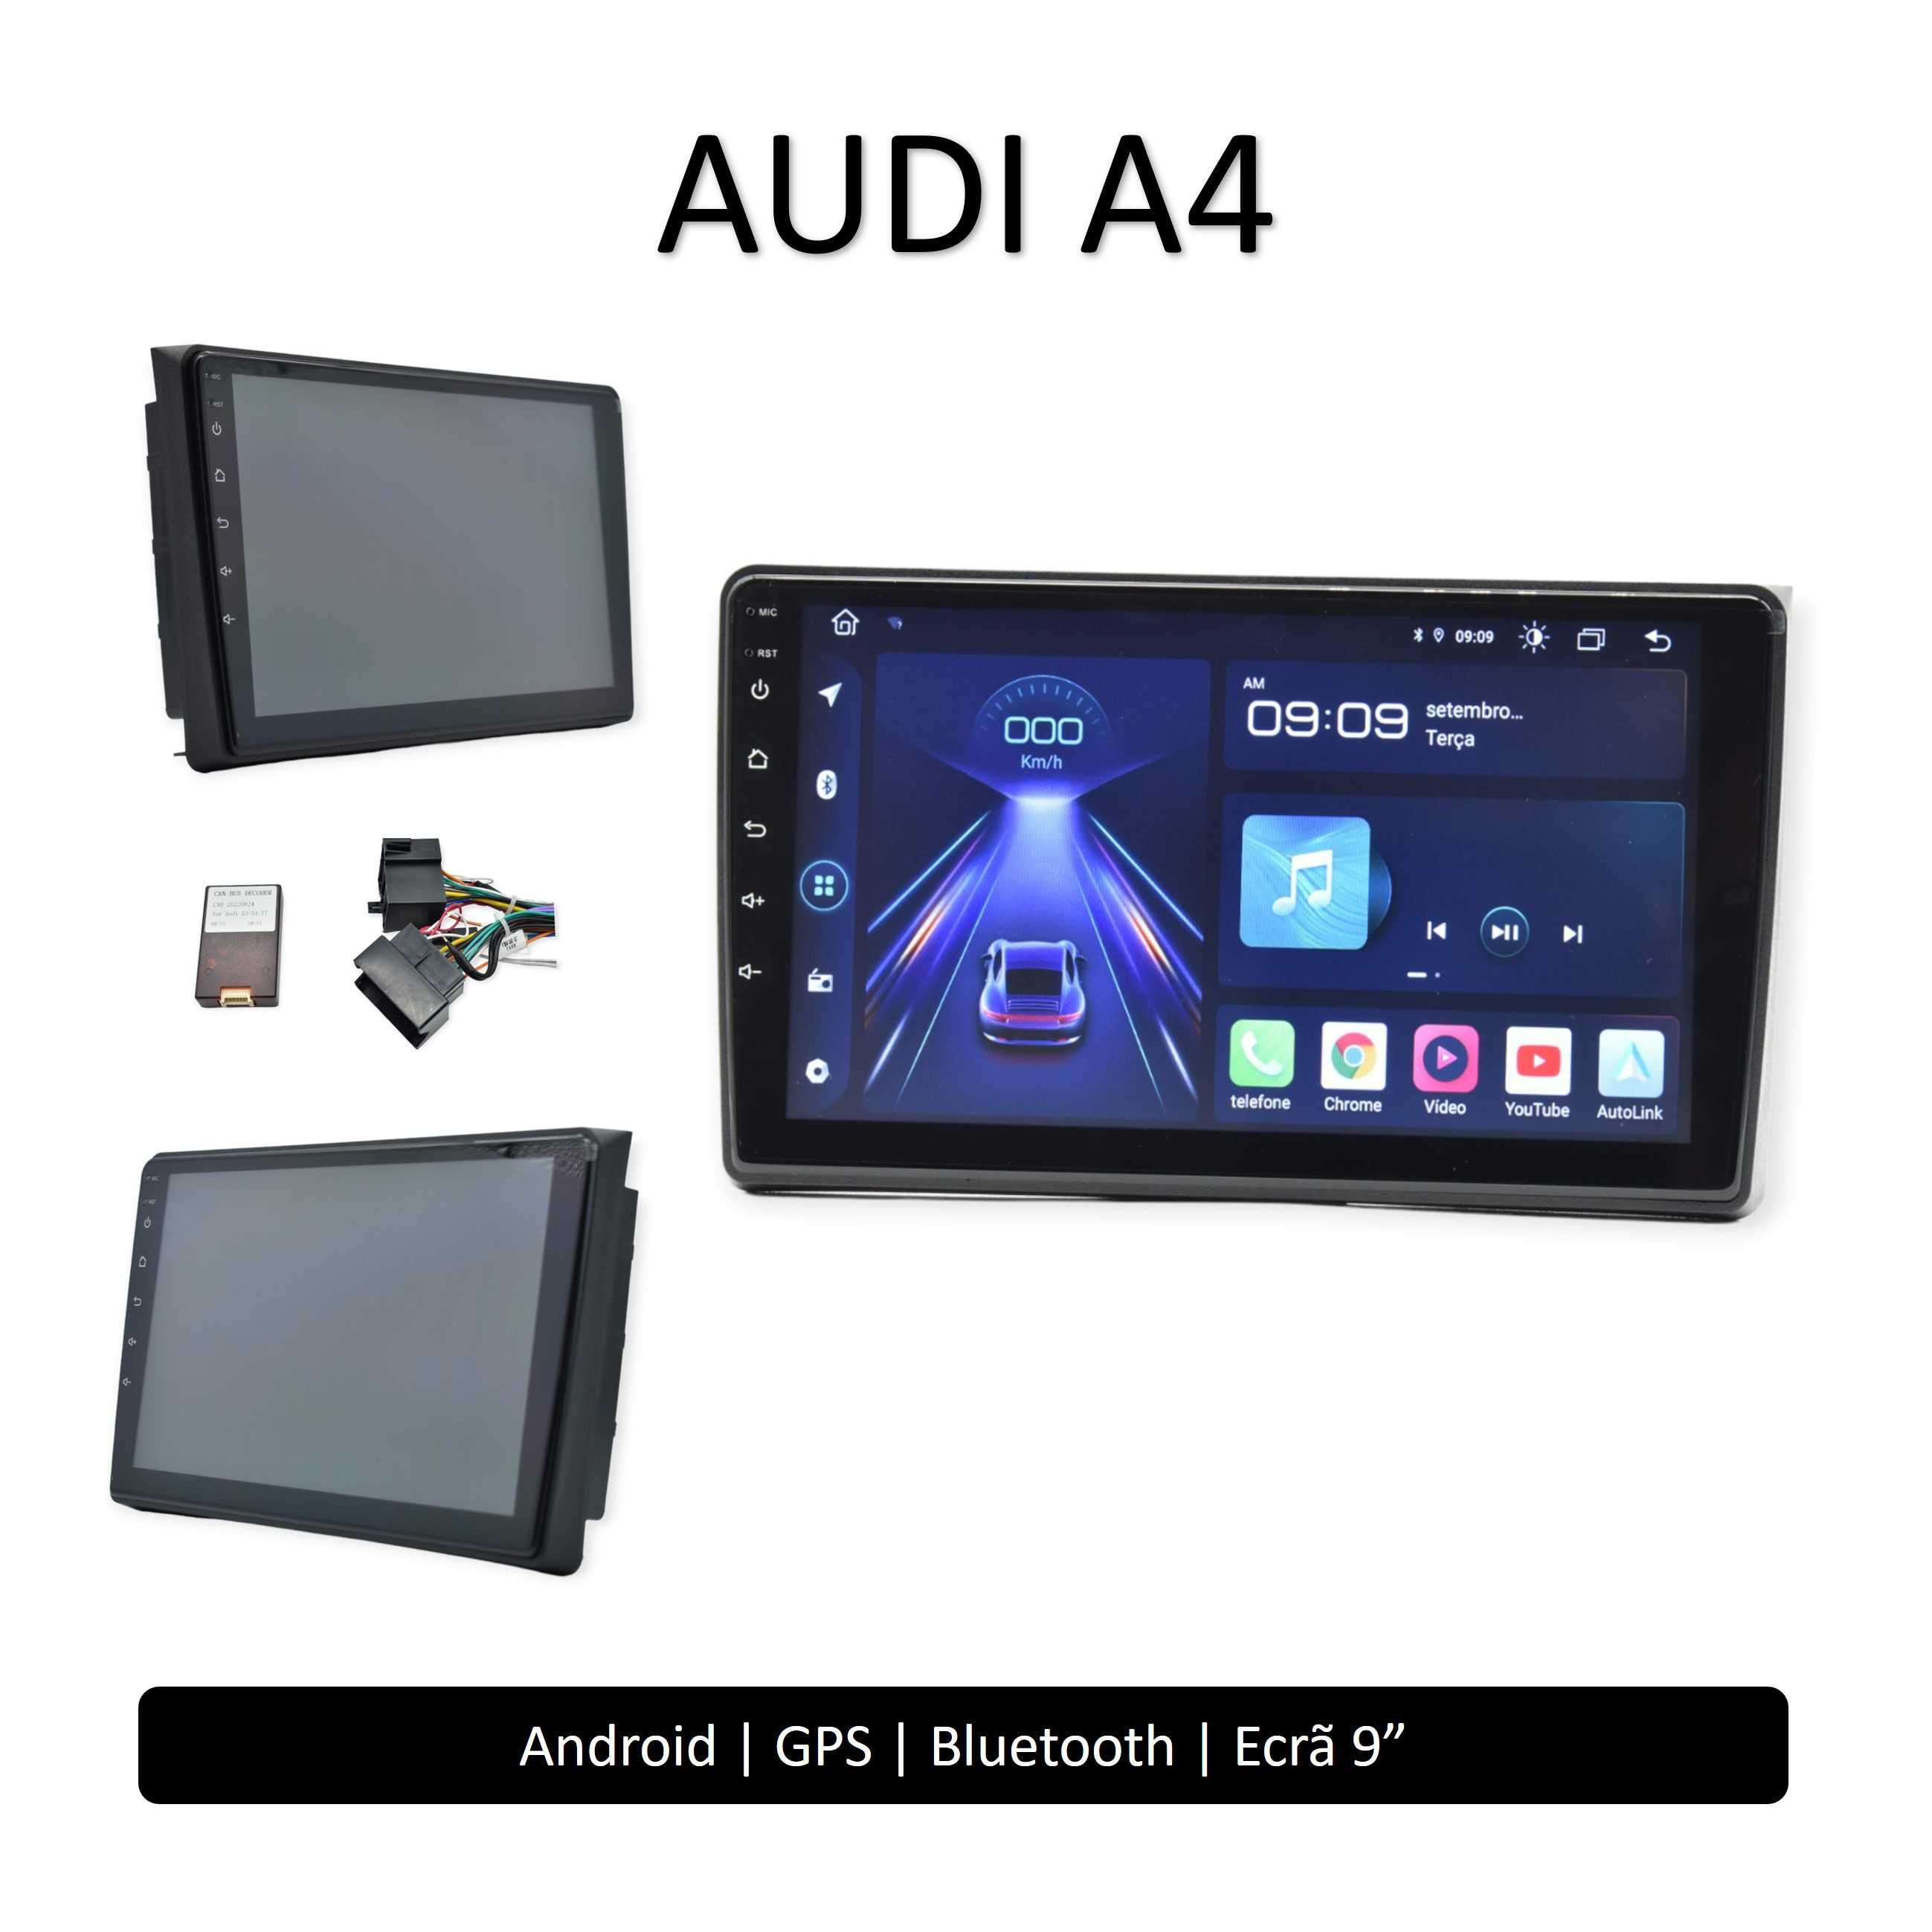 Rádio Audi A4 Auto Rádio 2 DIN Android • Wifi GPS BLUETOOTH + câmara